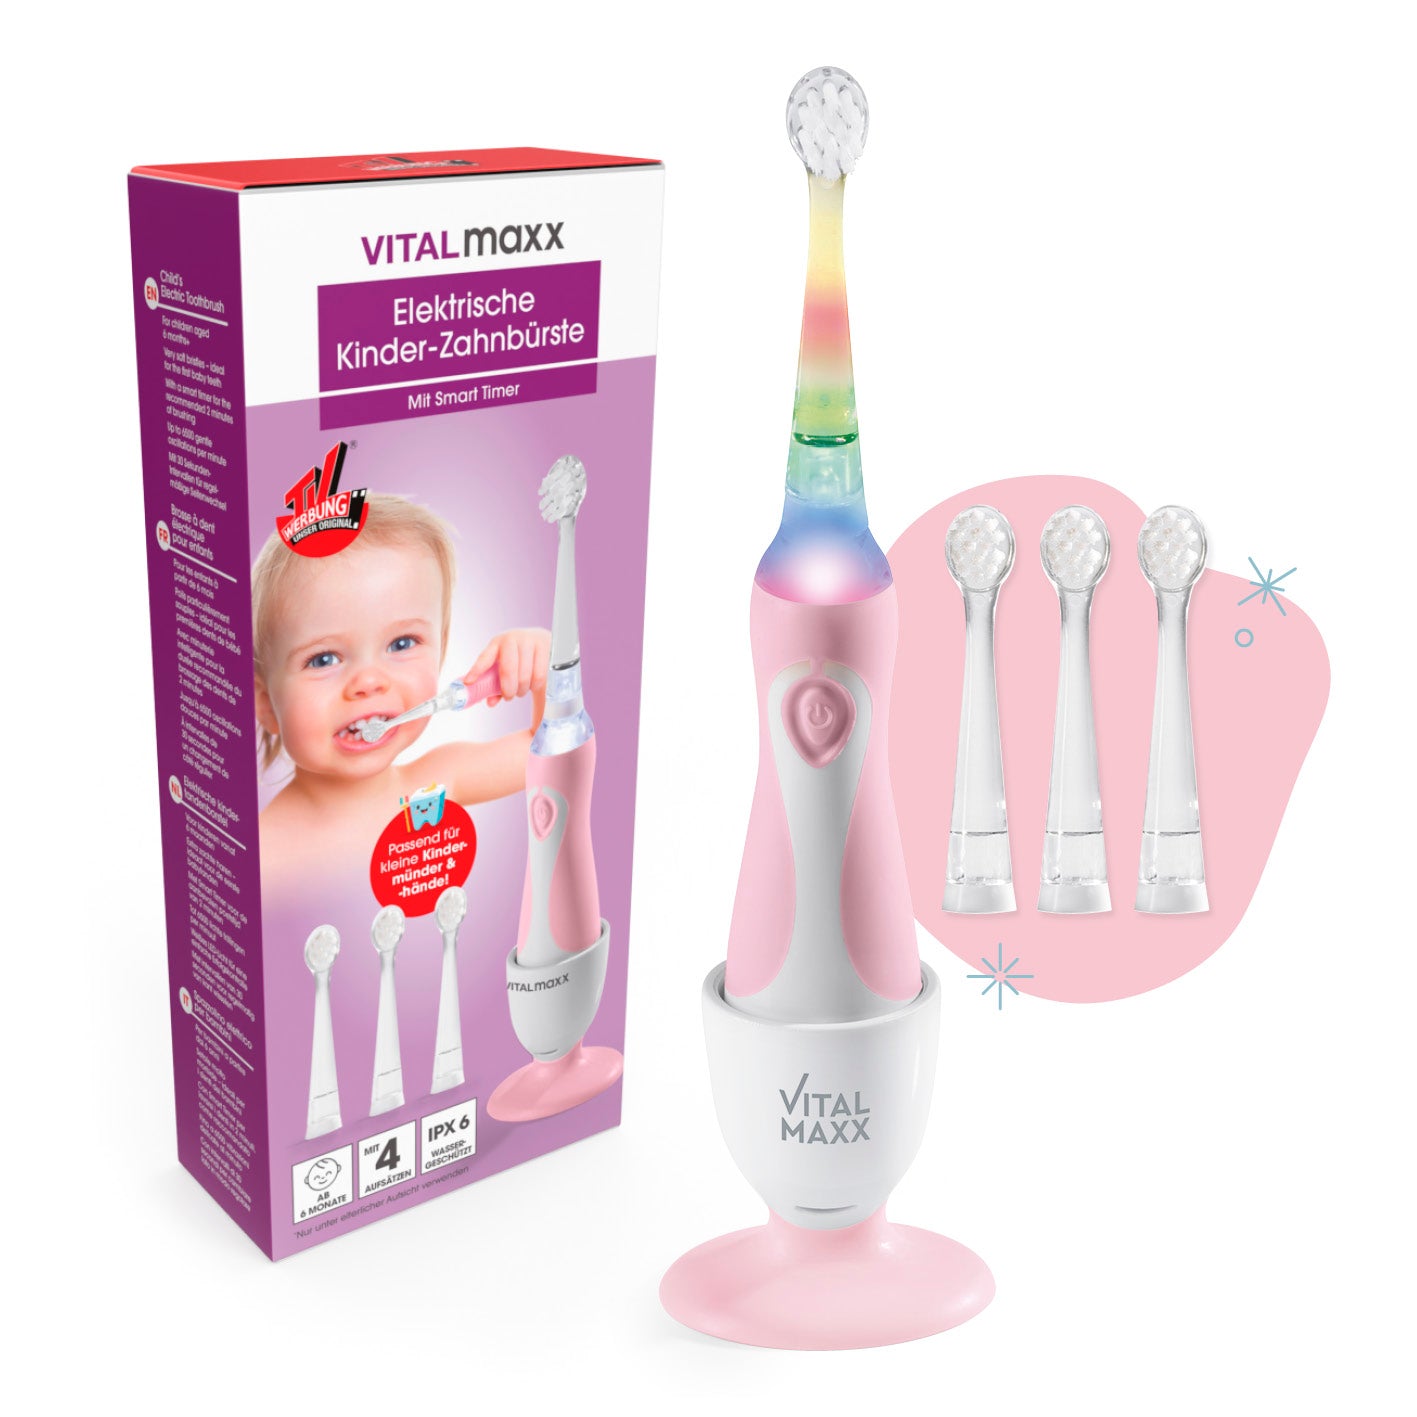 VITALmaxx Elektrische Kinder-Zahnbürste mit Smart Timer - Ab 6 Monate* - Rosa/Weiß von VITALmaxx